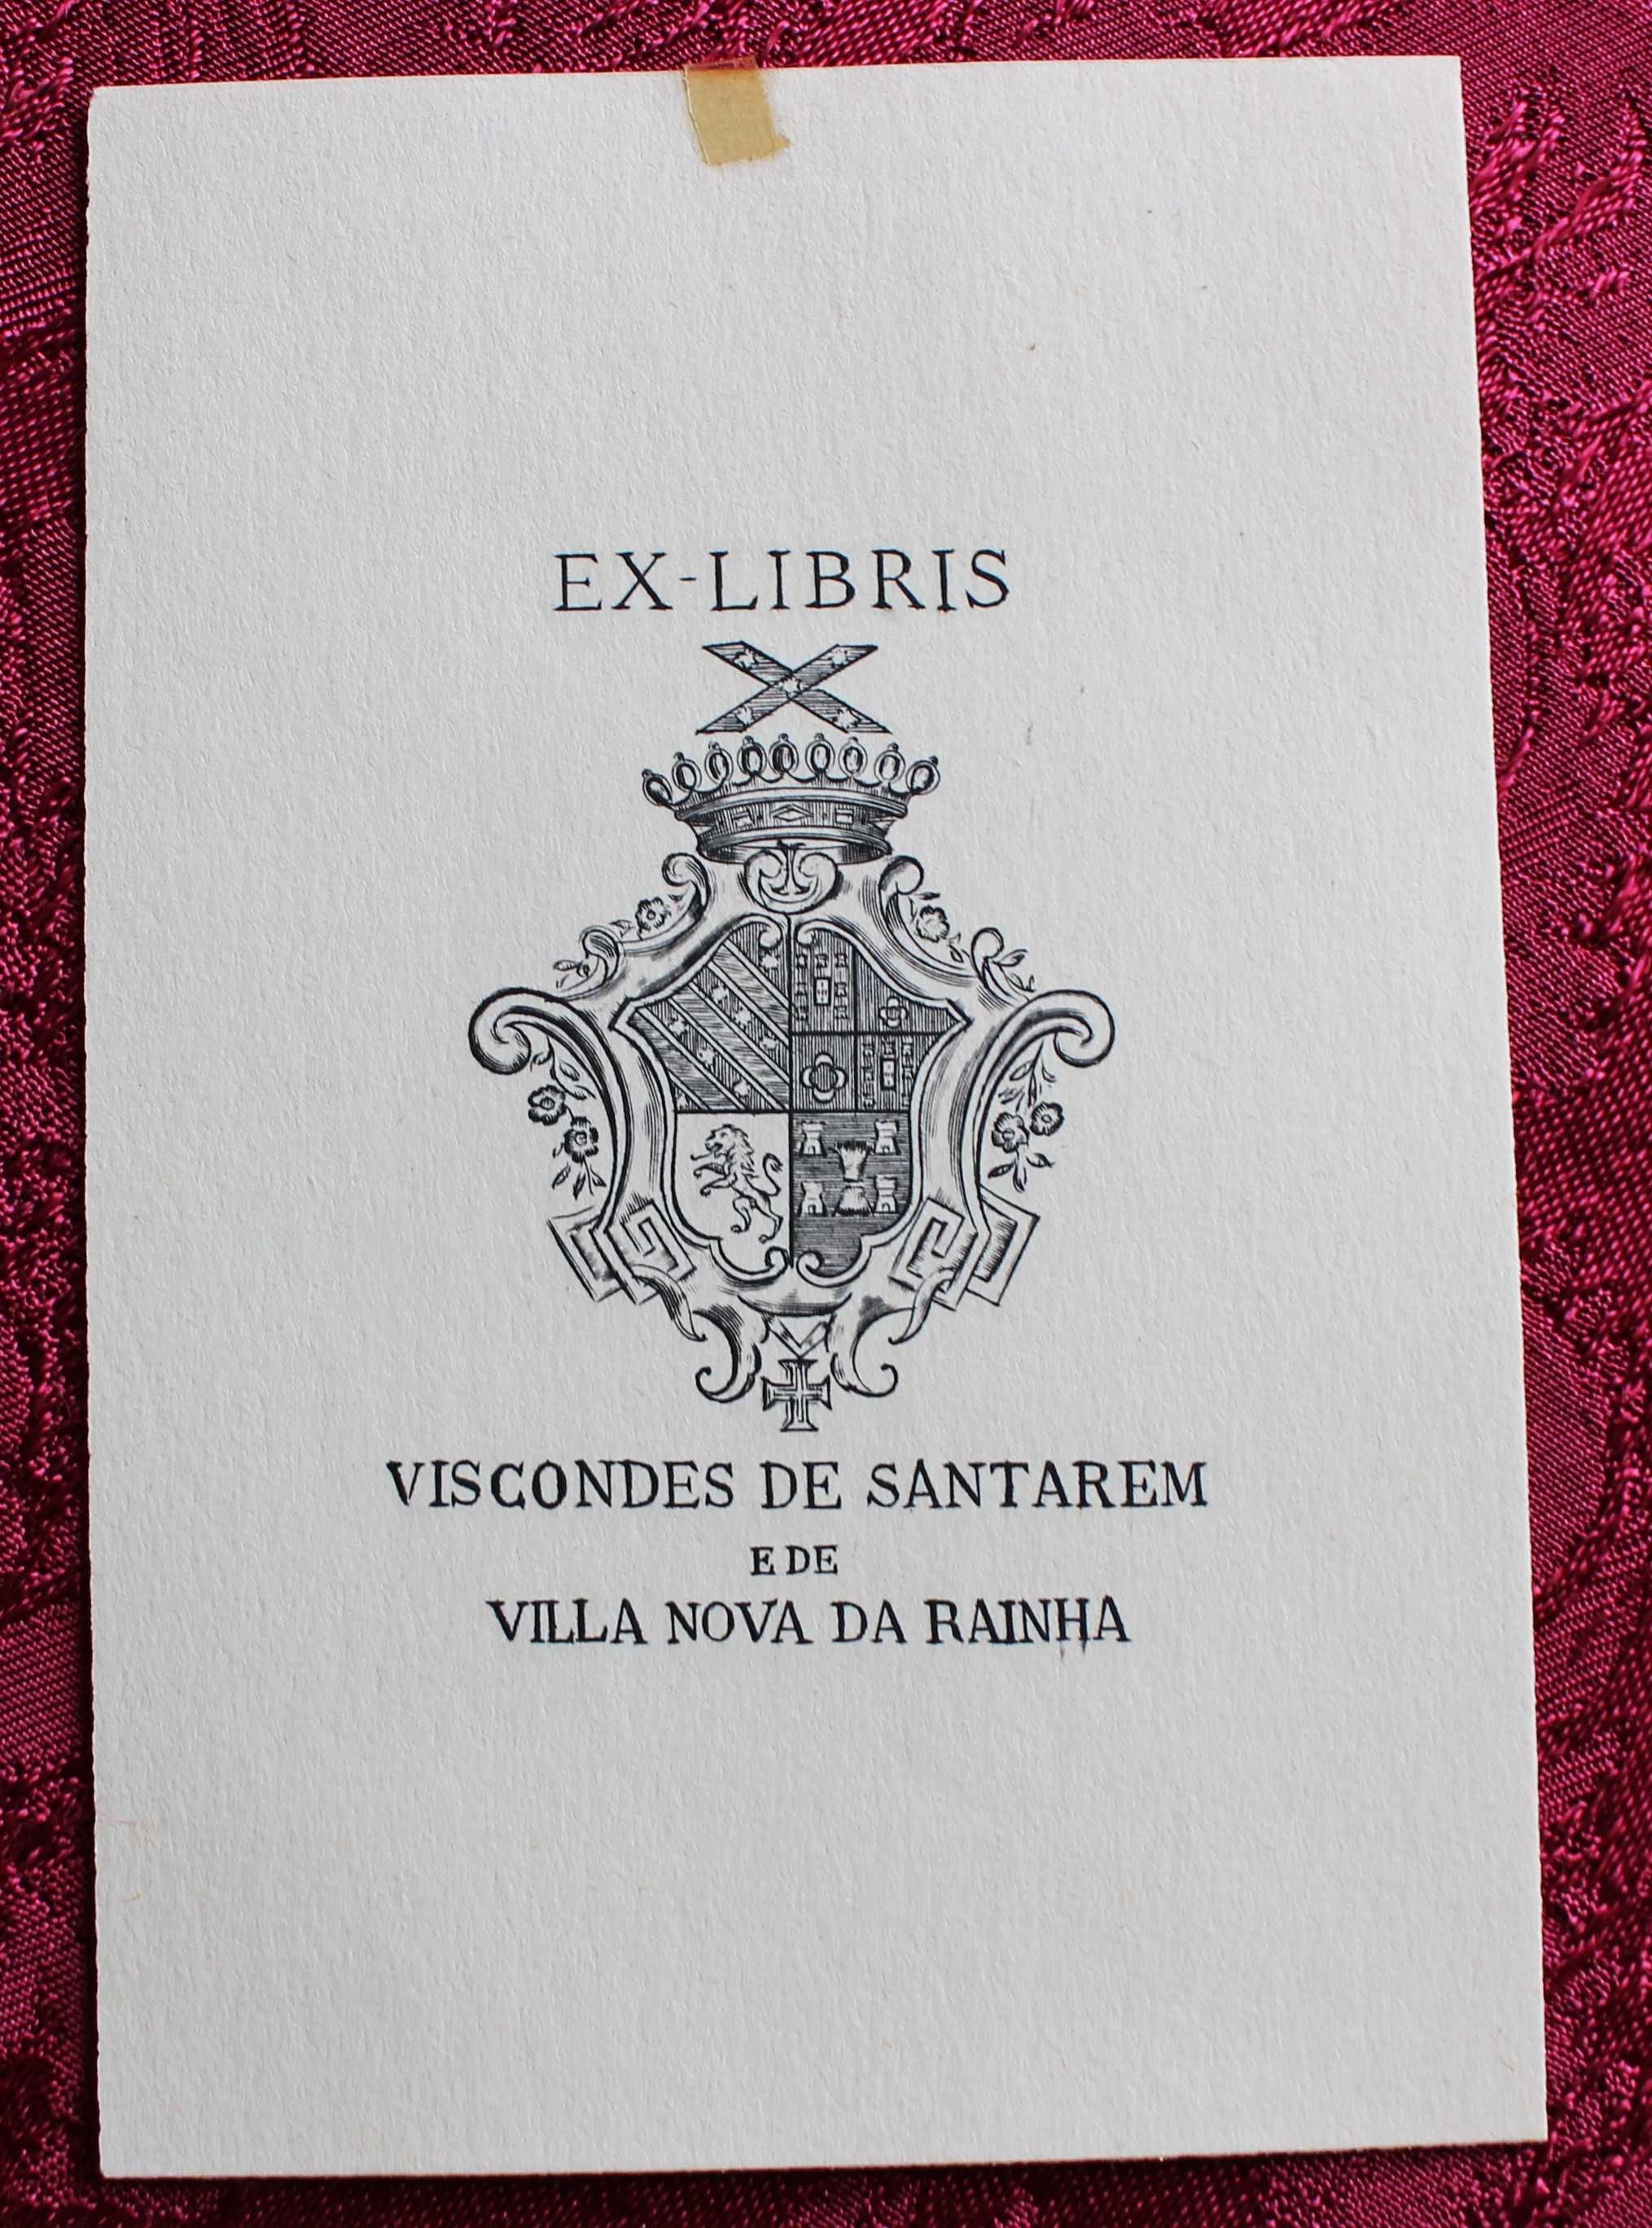 Viscondes de Santarém e de Vila Nova da Rainha, Ex-Libris